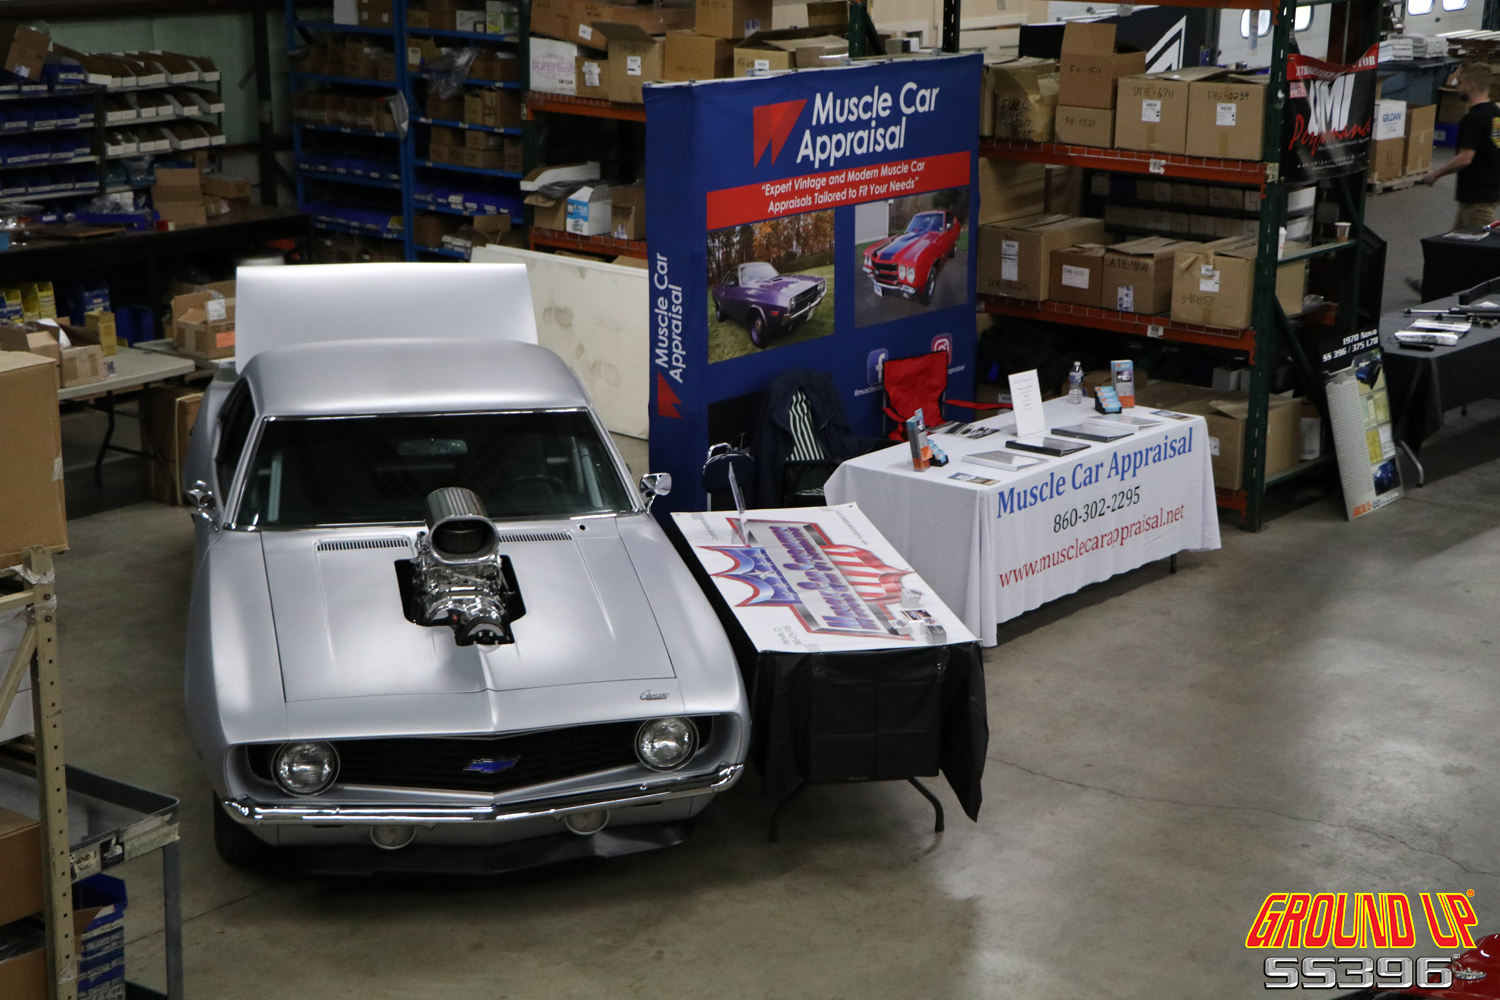 2019 Ground Up Vendor Expo - Muscle Car Appraisal Jim Murphy